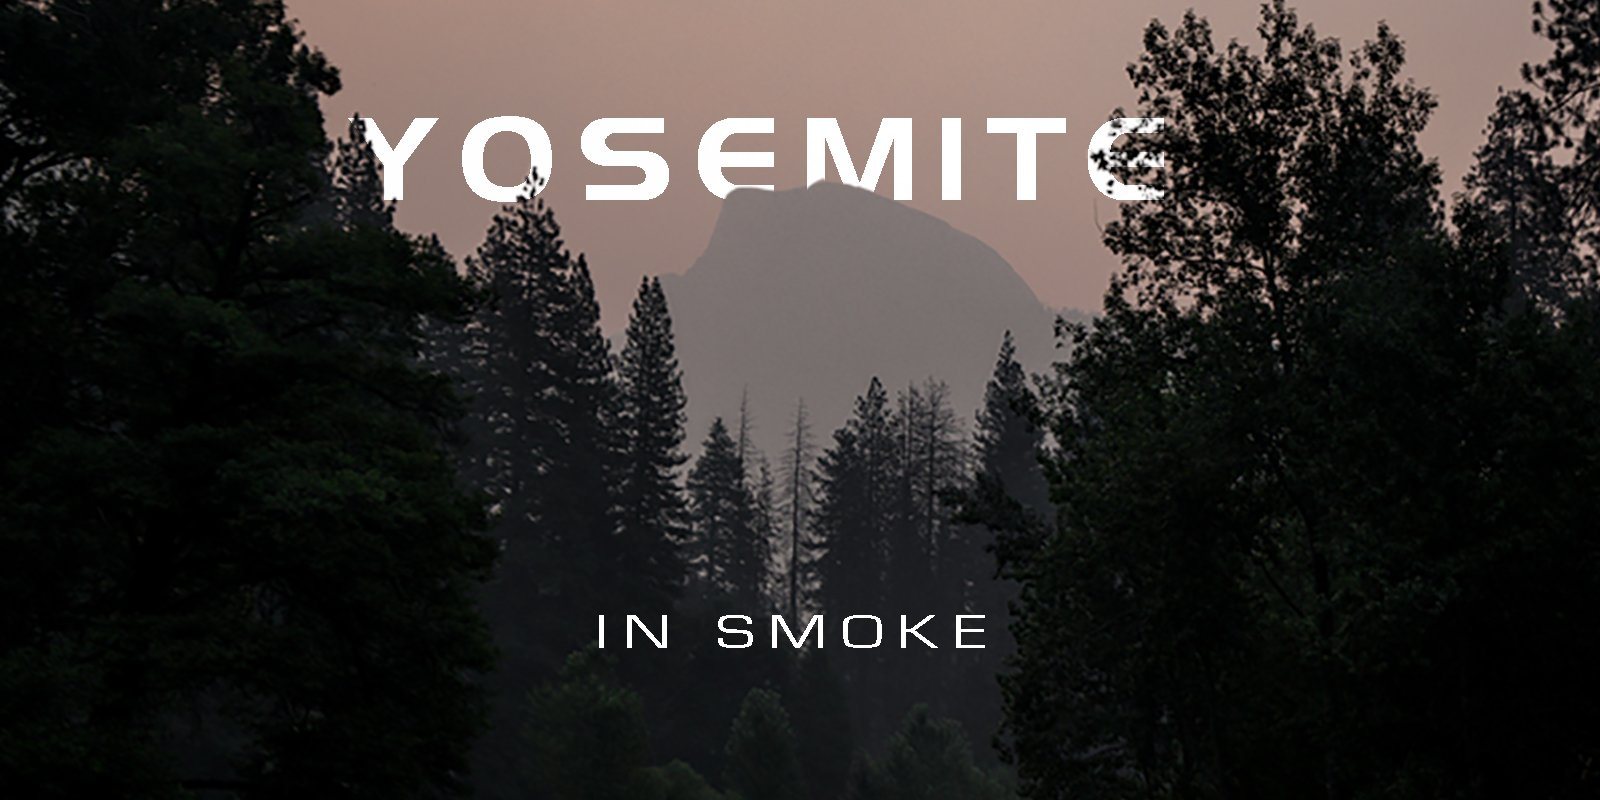 Yosemite photographed in smoke